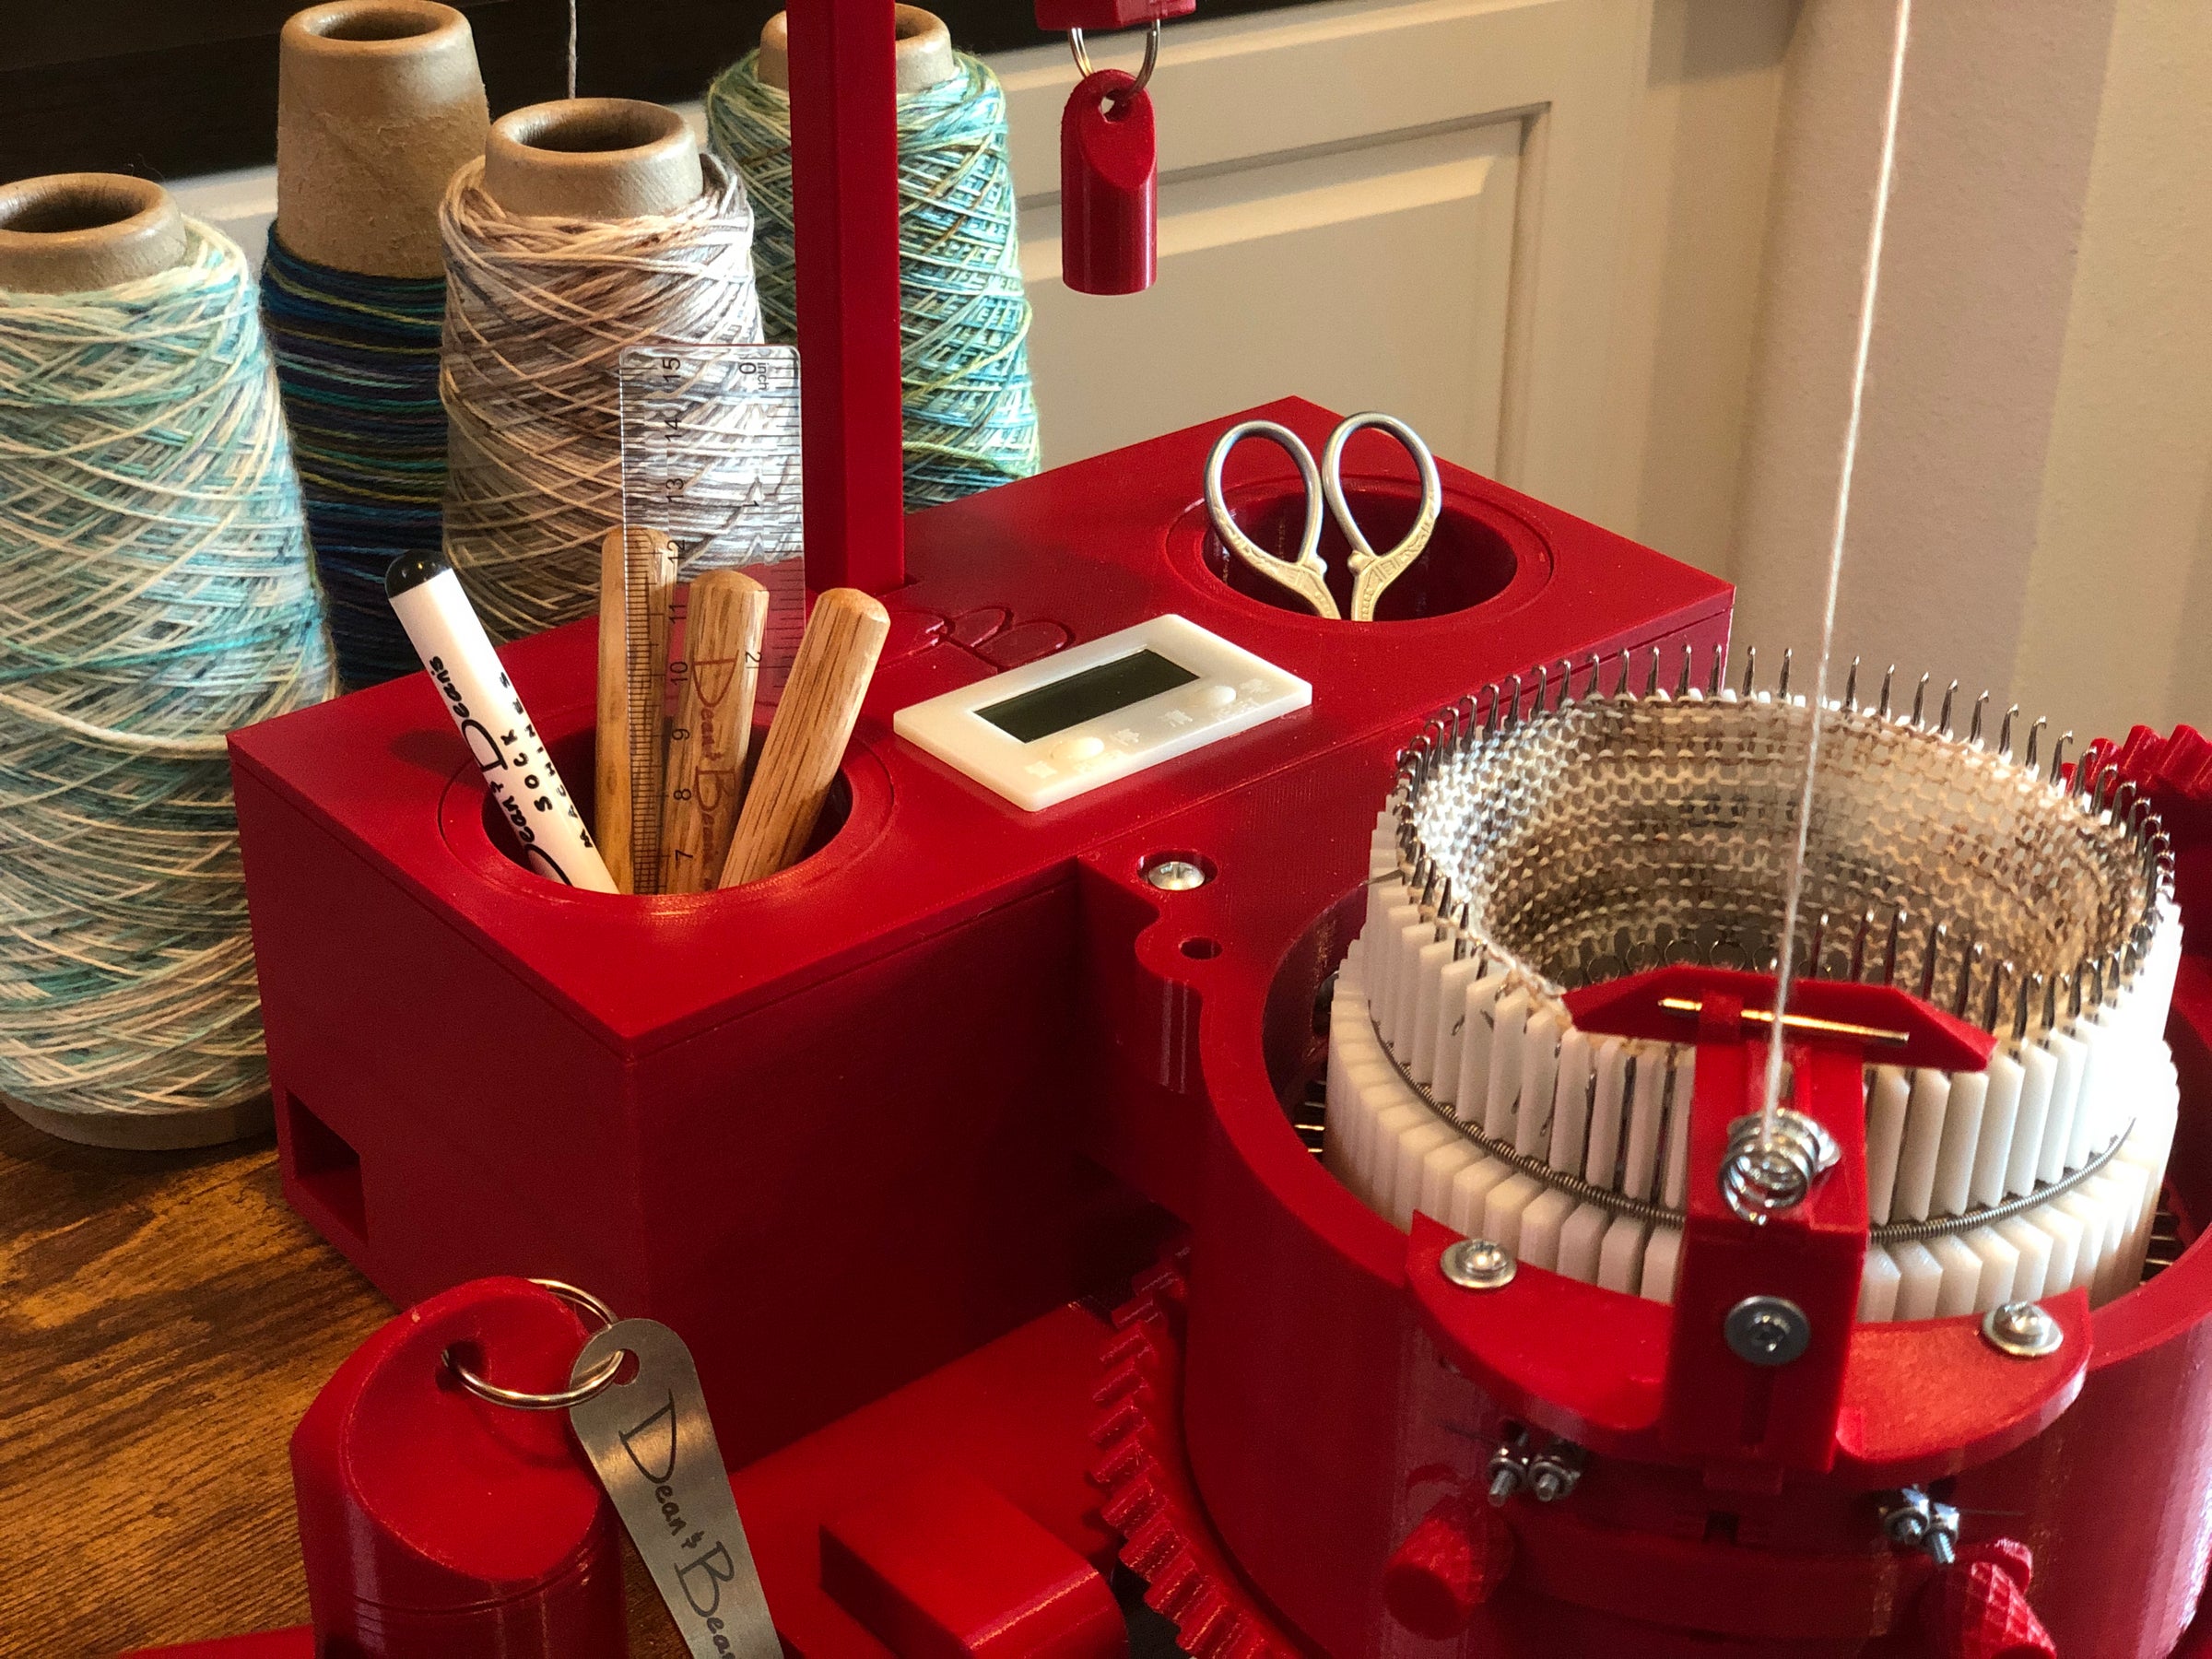 Circular Knitting Machine Cylinders